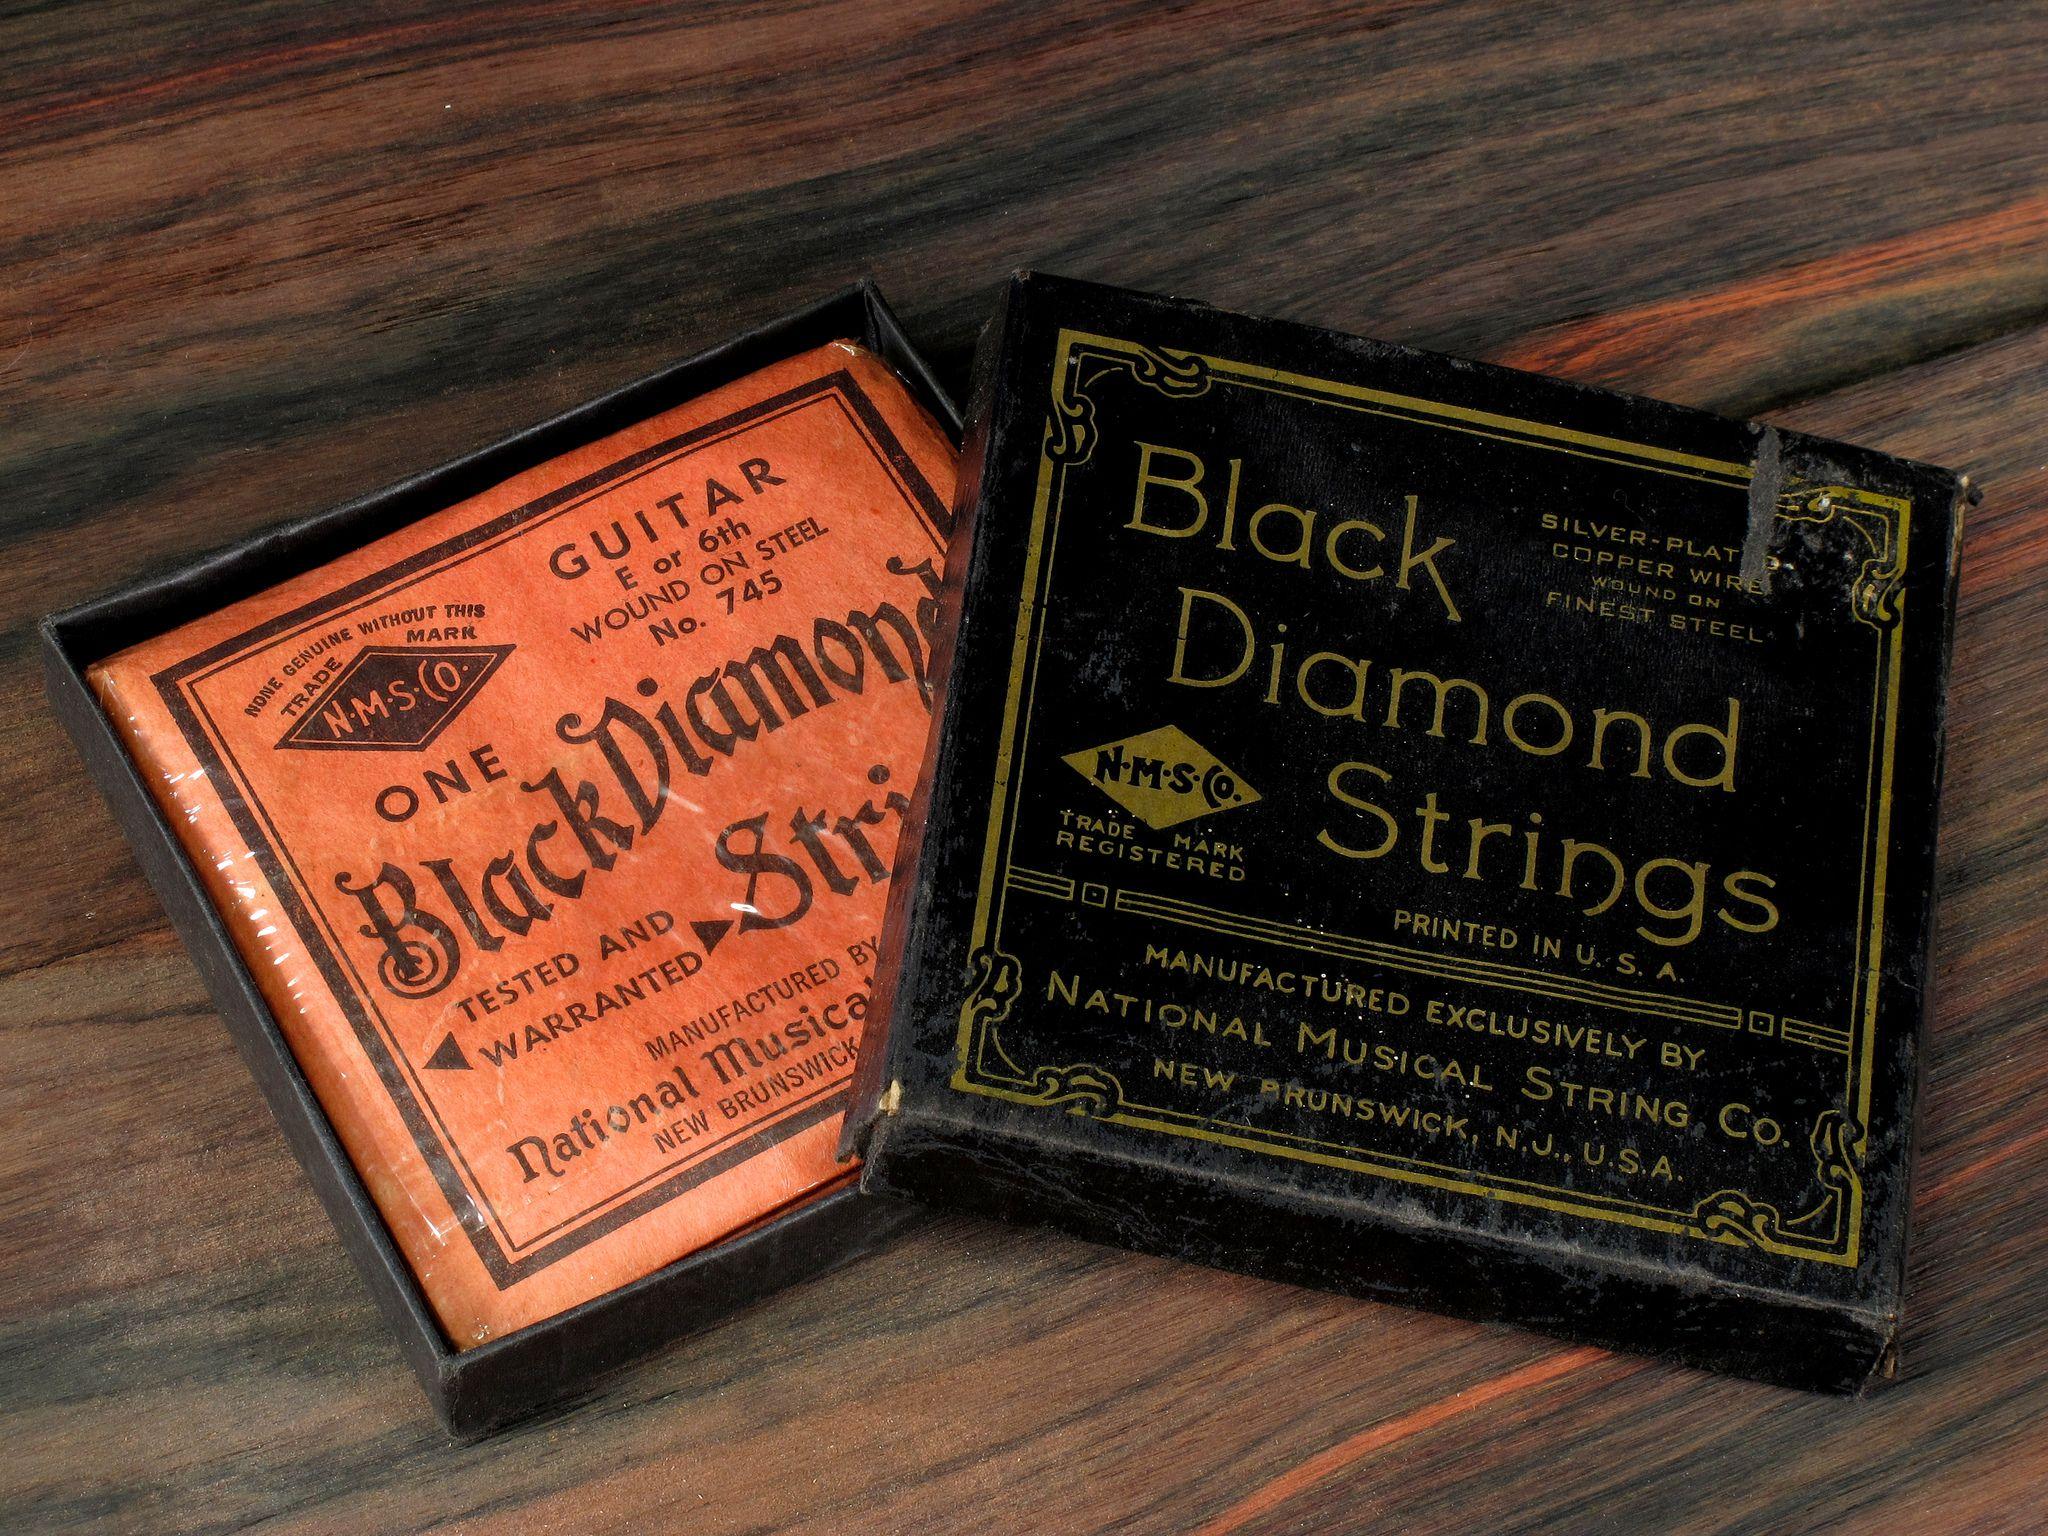 Black Diamond Strings Logo - Anyone else remember Black Diamond strings? - Page 3 - The Acoustic ...